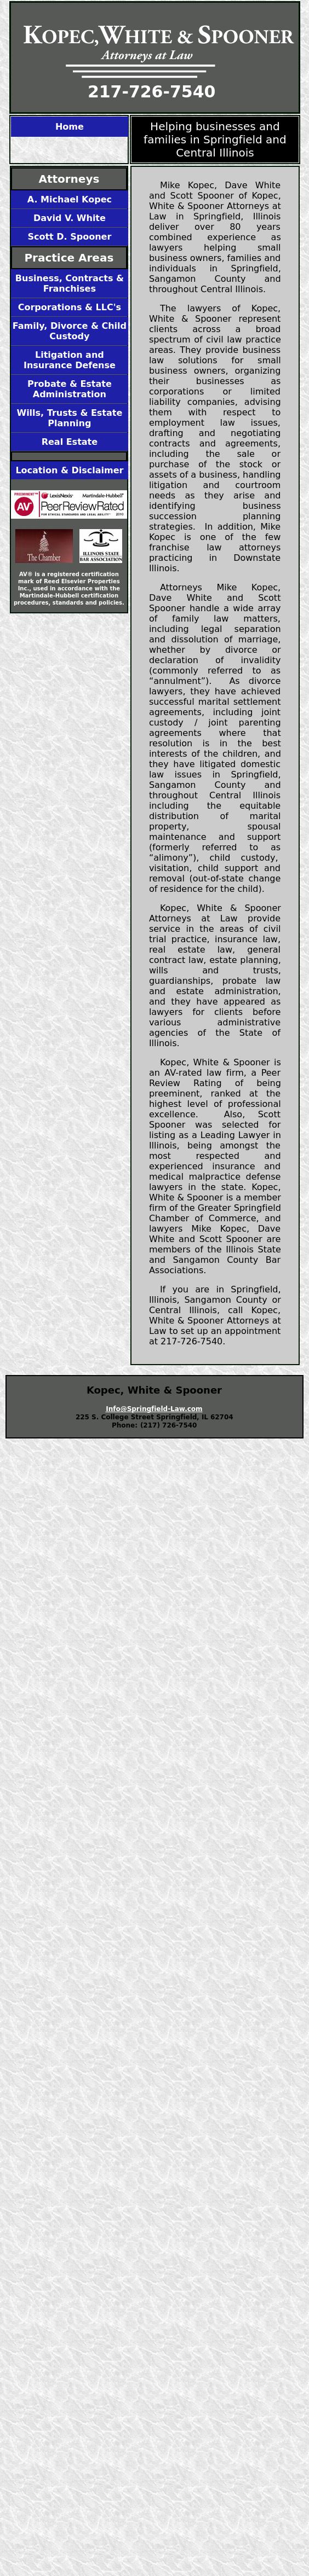 Kopec, White & Spooner - Springfield IL Lawyers